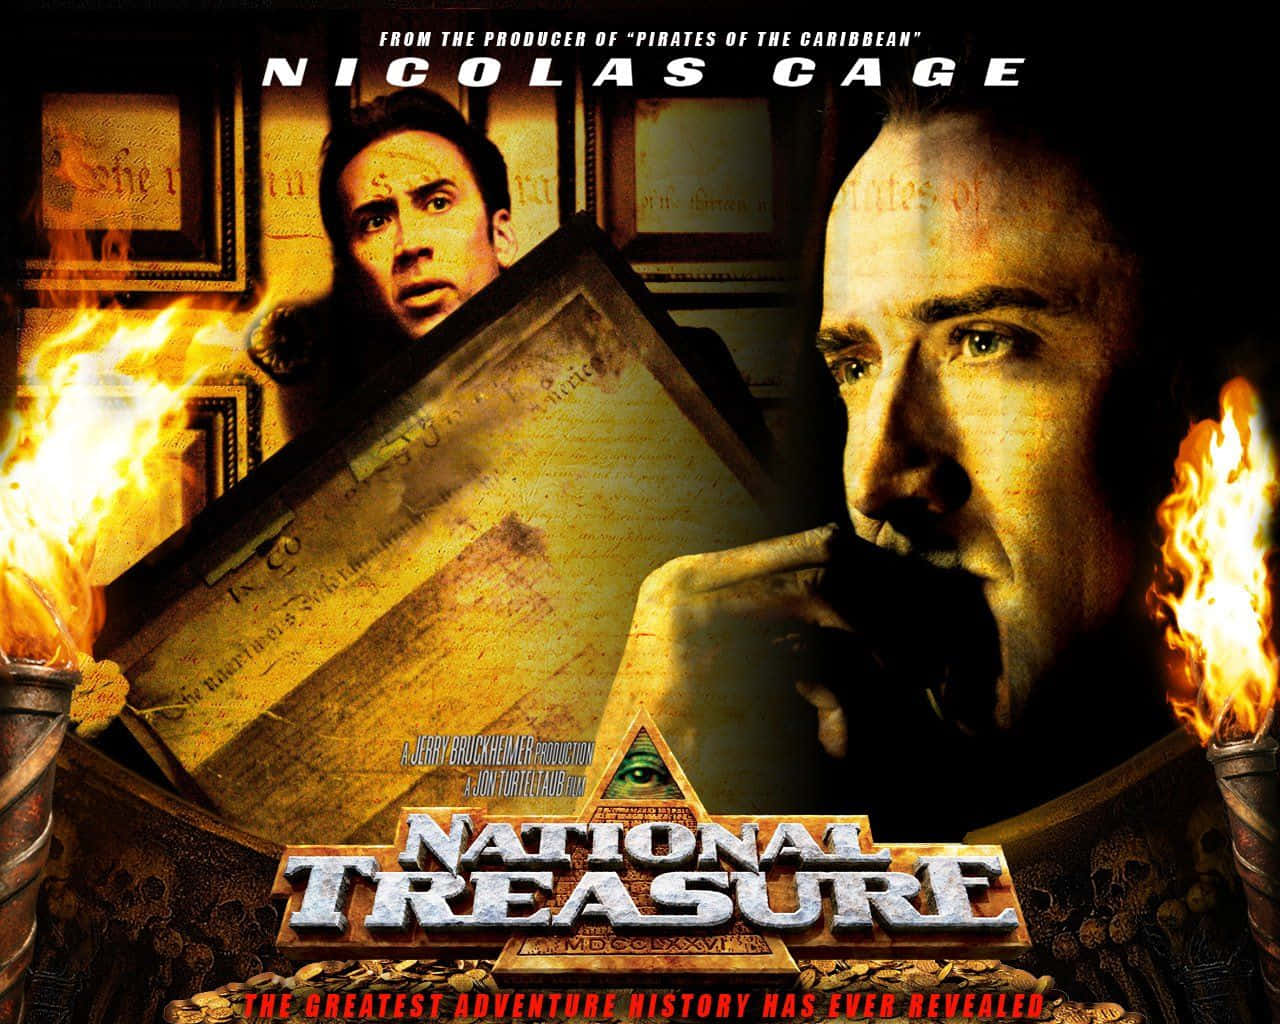 National Treasure Movie Poster featuring Nicolas Cage Wallpaper